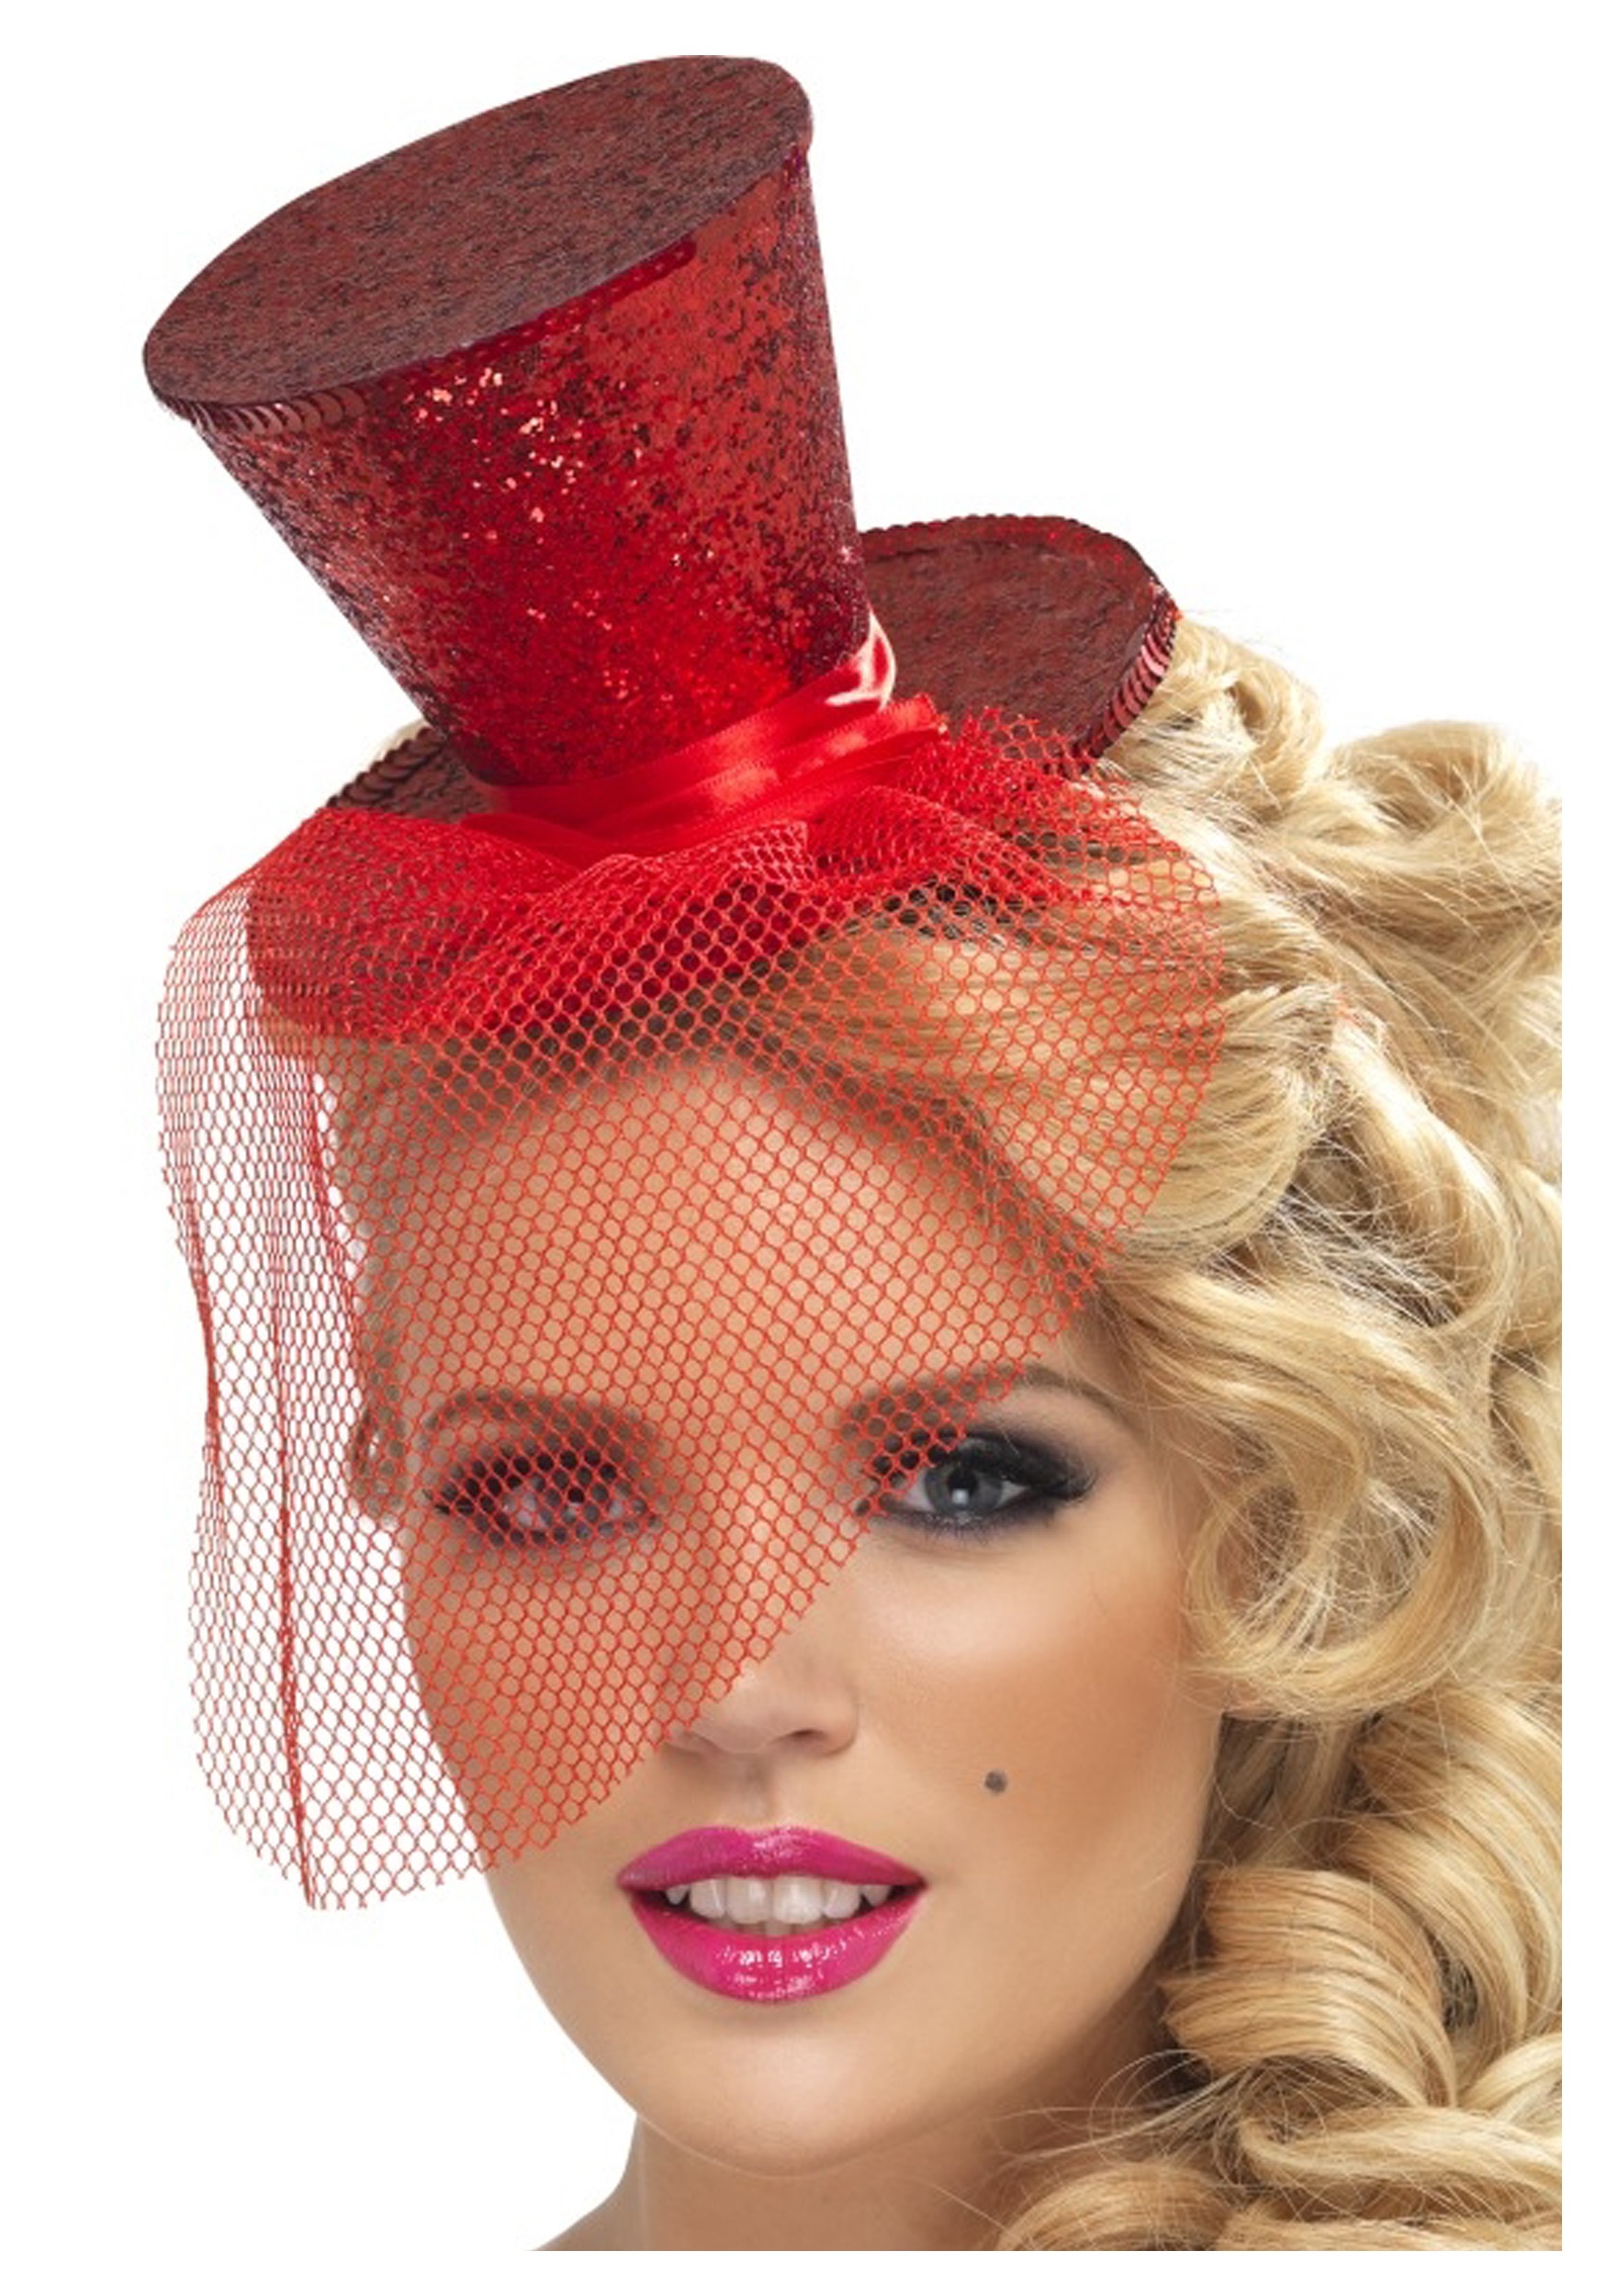 Red Glitter Mini Top Hat for Women